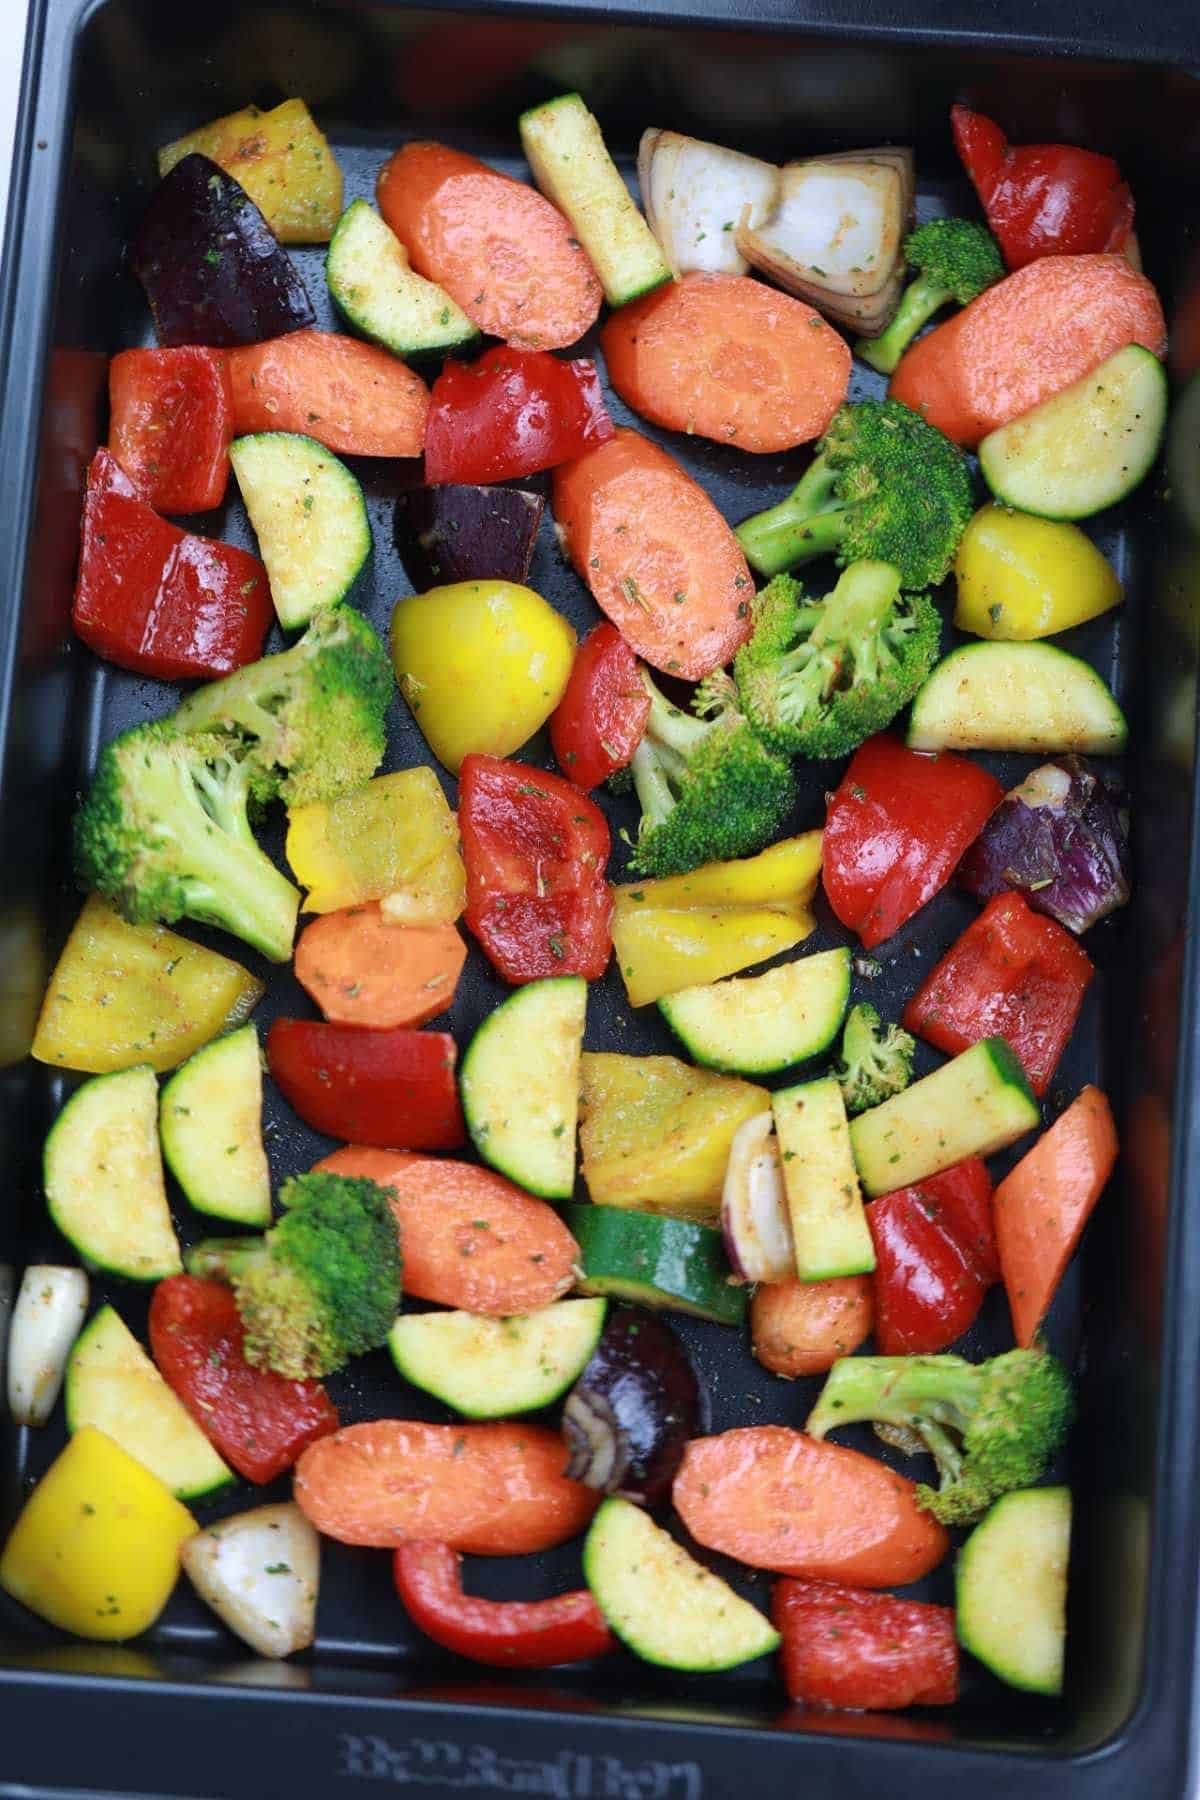 the veggies arranged in a baking pan.